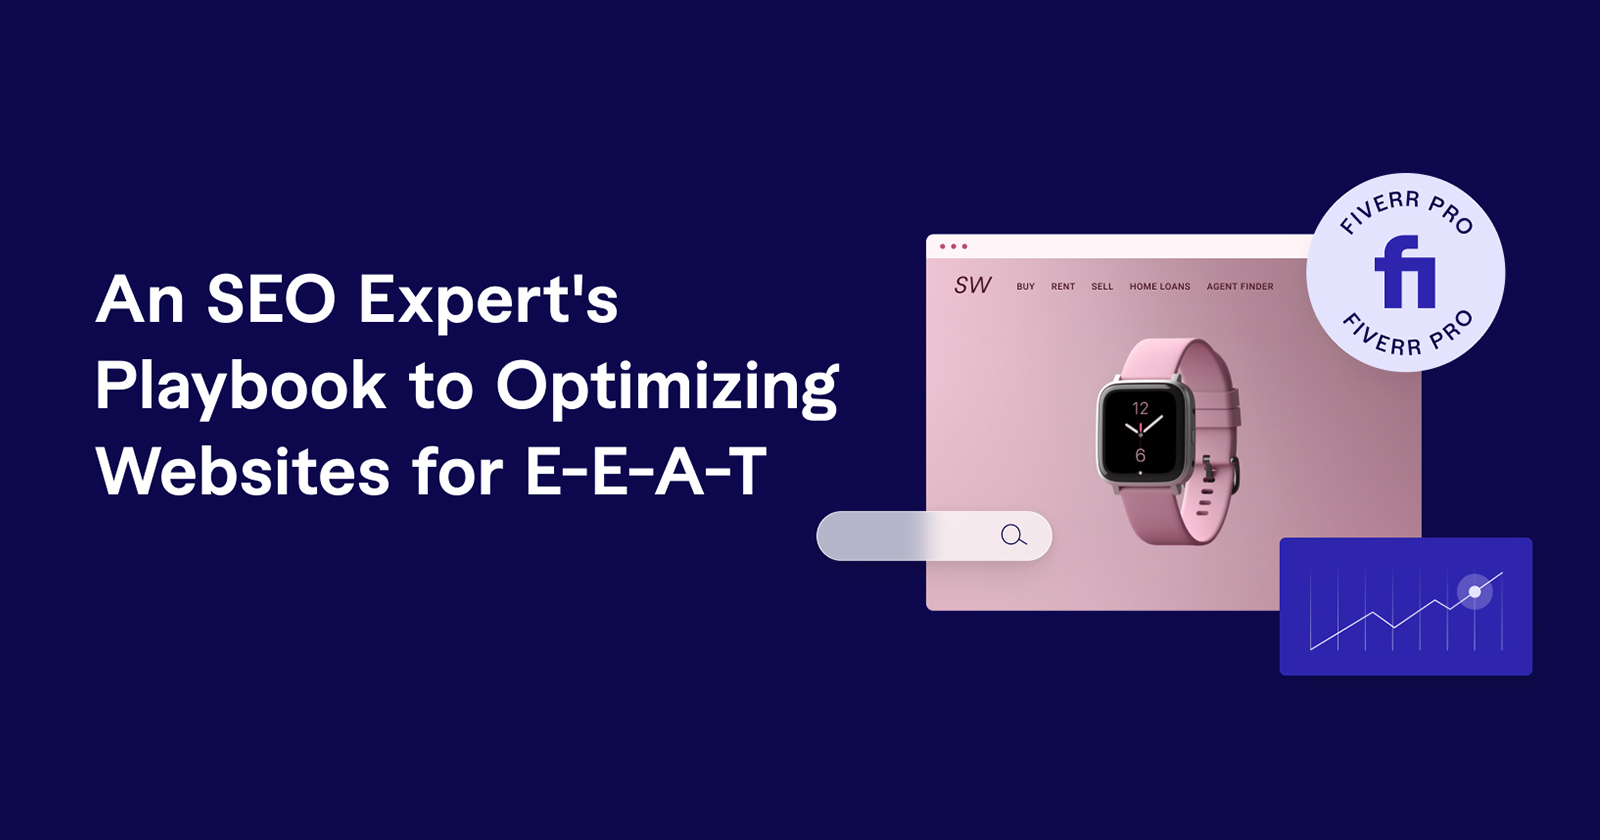 An SEO Expert’s Playbook To Optimizing Websites For E-E-A-T